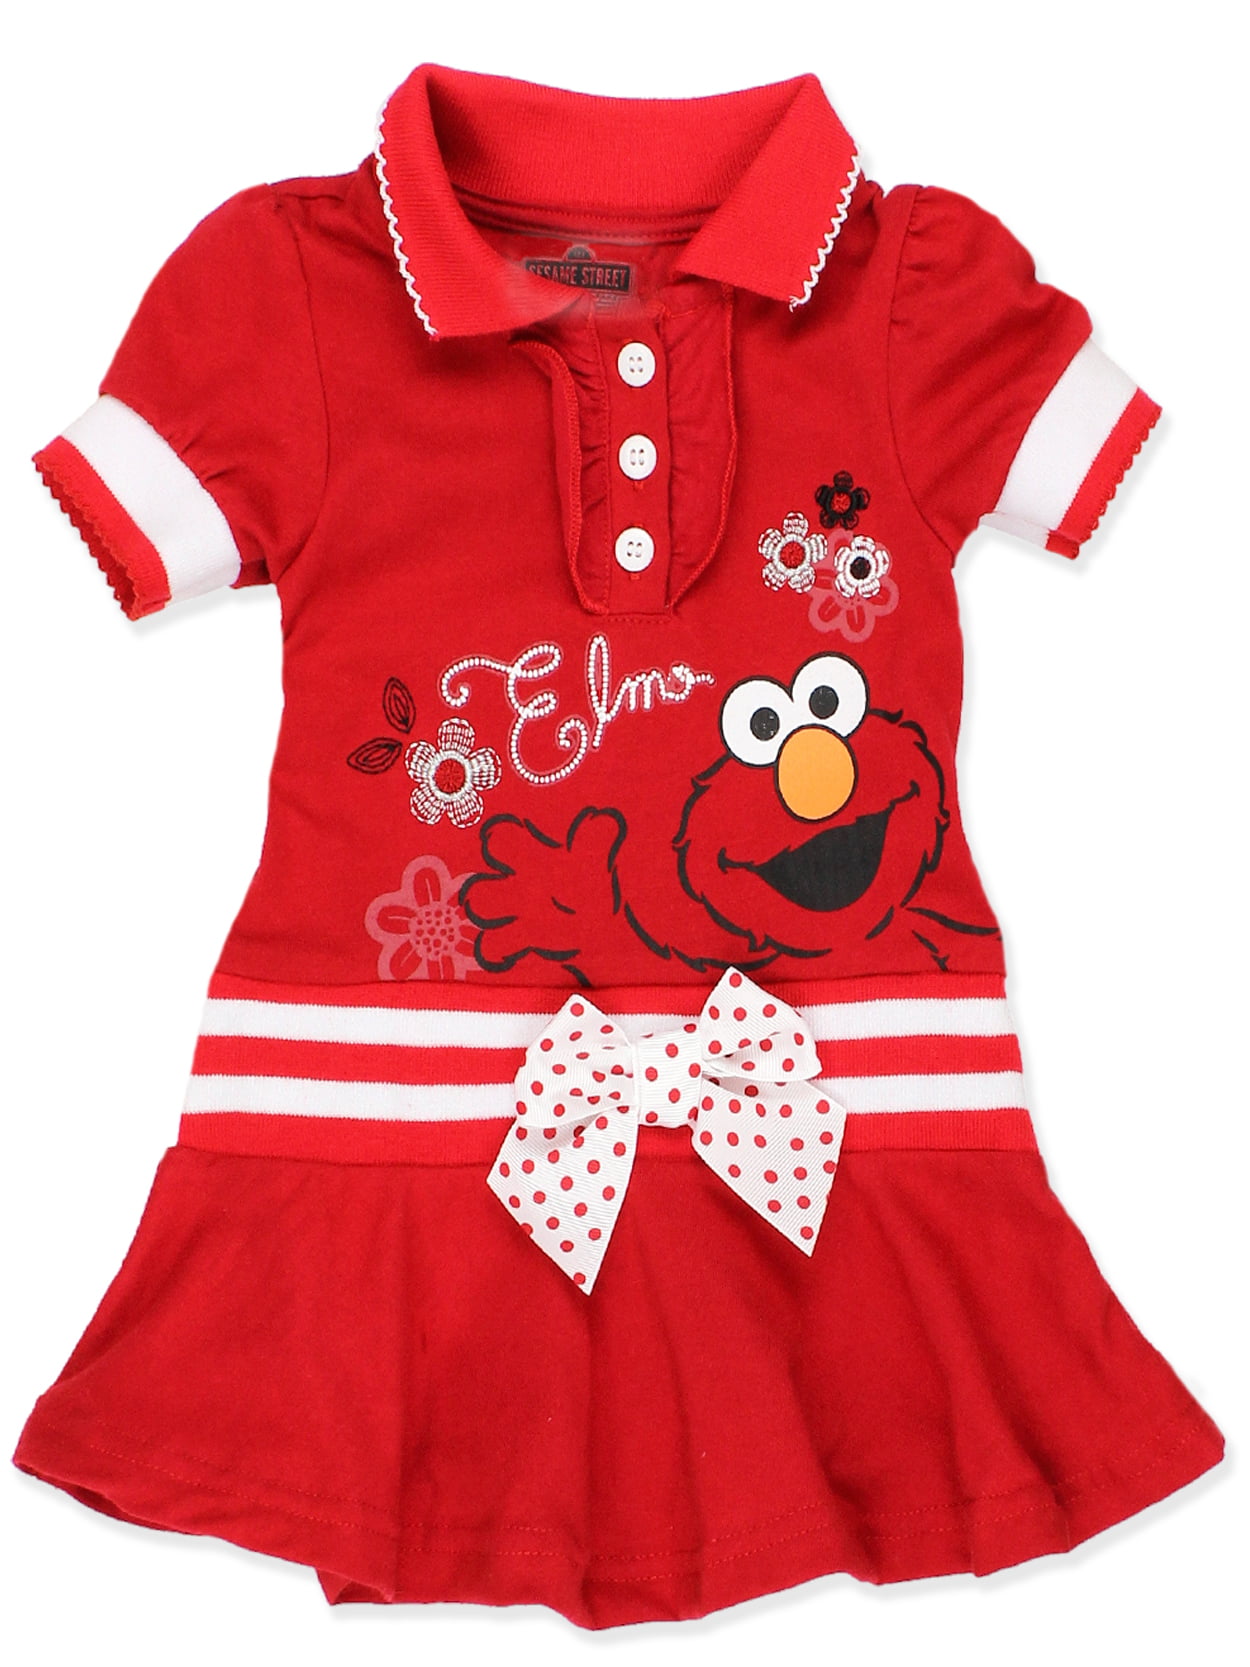 elmo clothes for baby girl